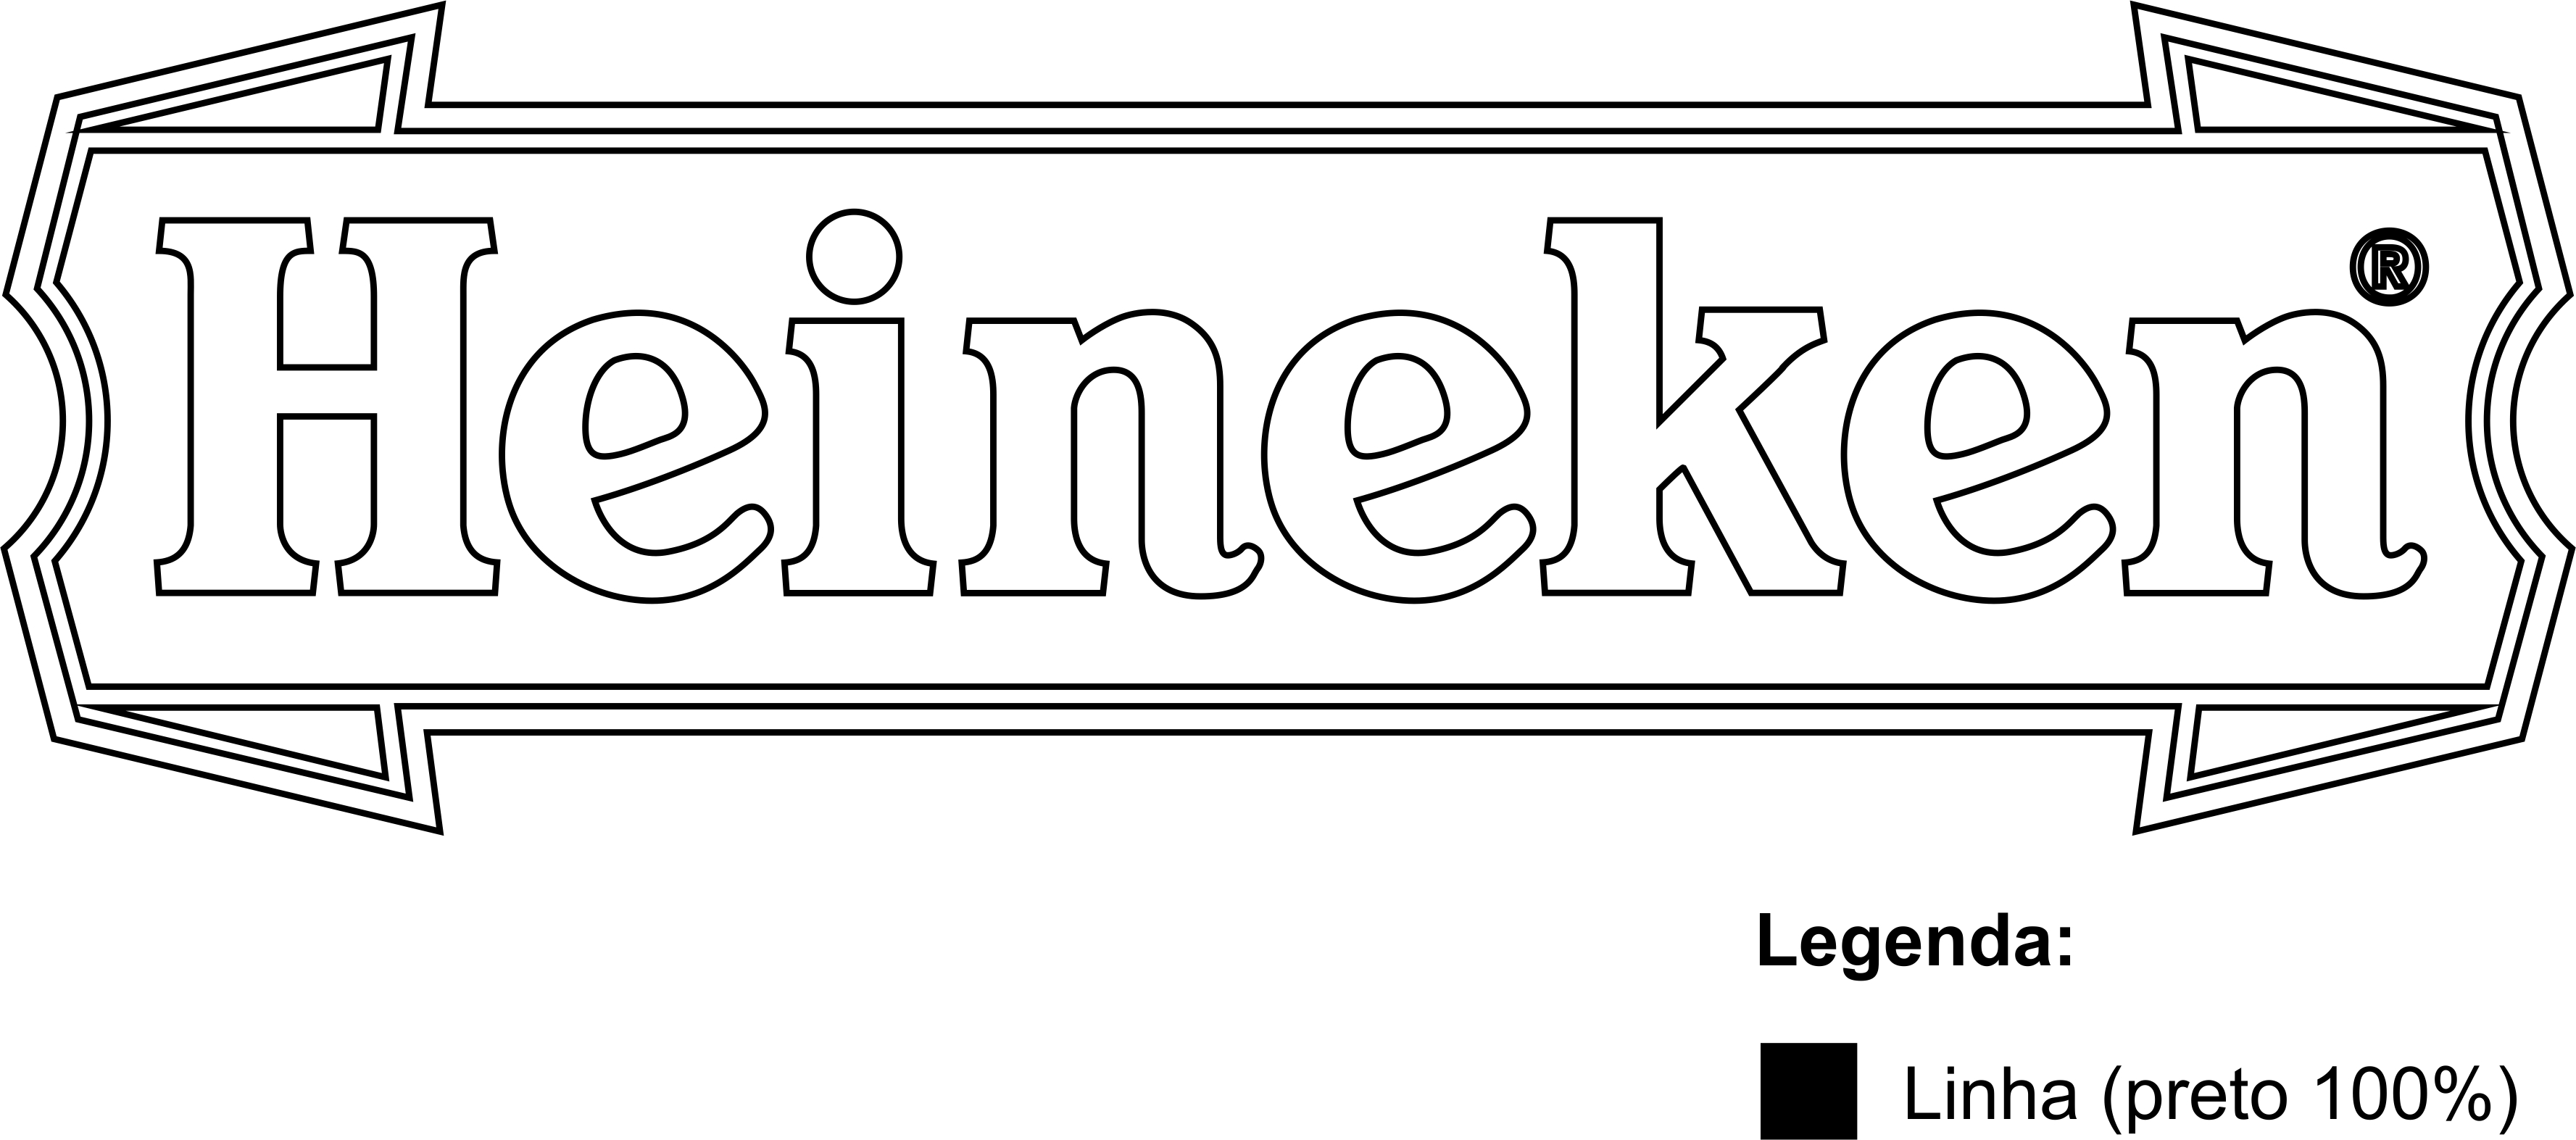 Logomarca Heineken